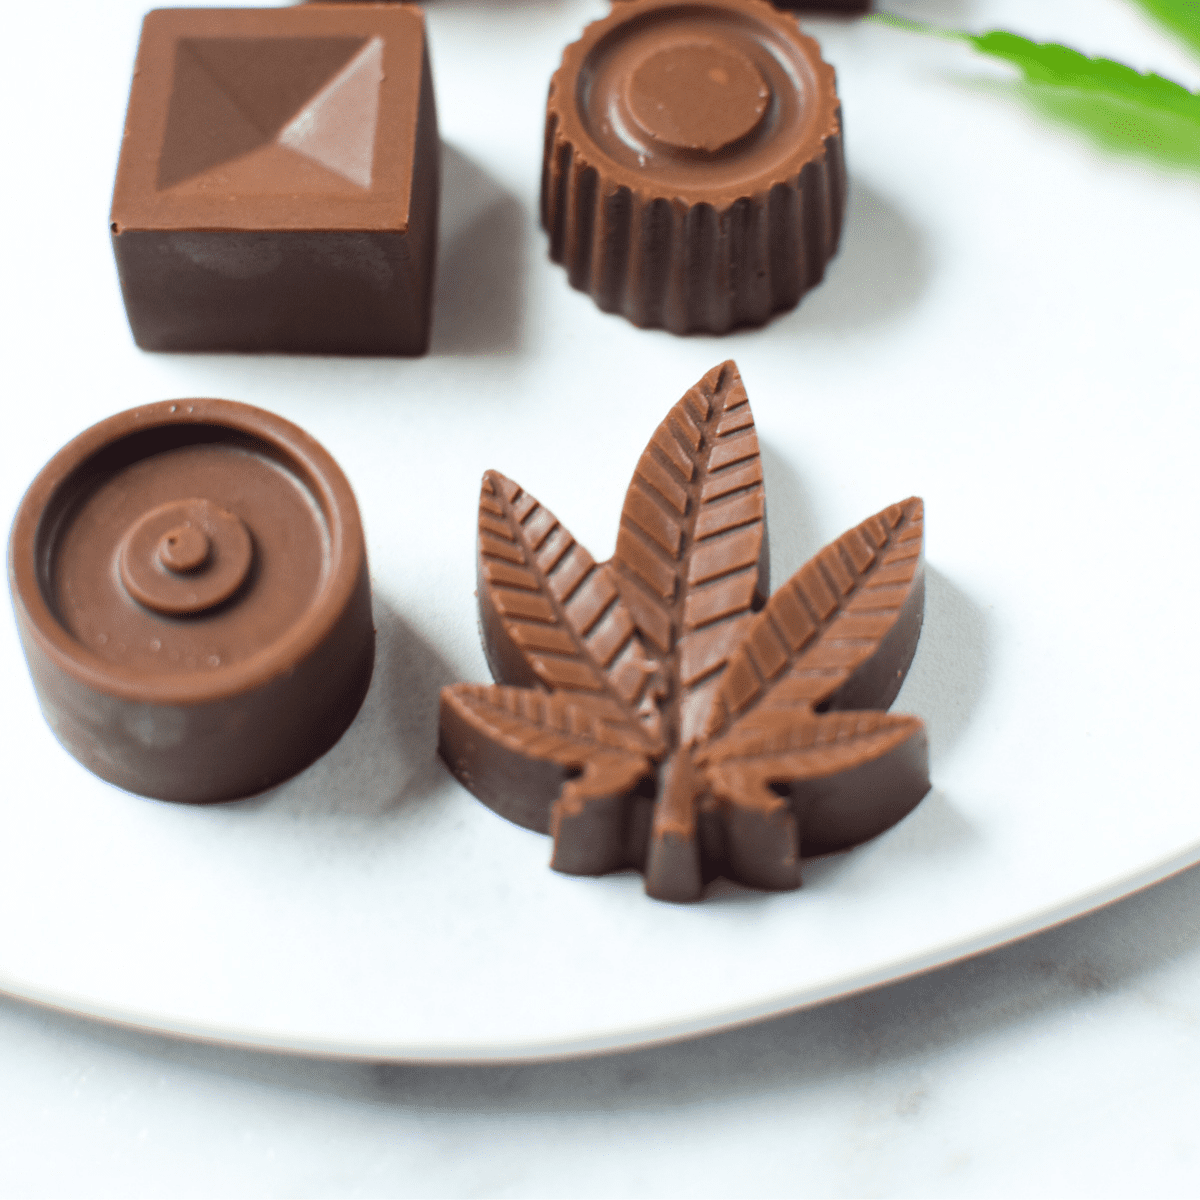 https://emilykylenutrition.com/wp-content/uploads/2021/07/Easy-Cannabis-Chocolates.png